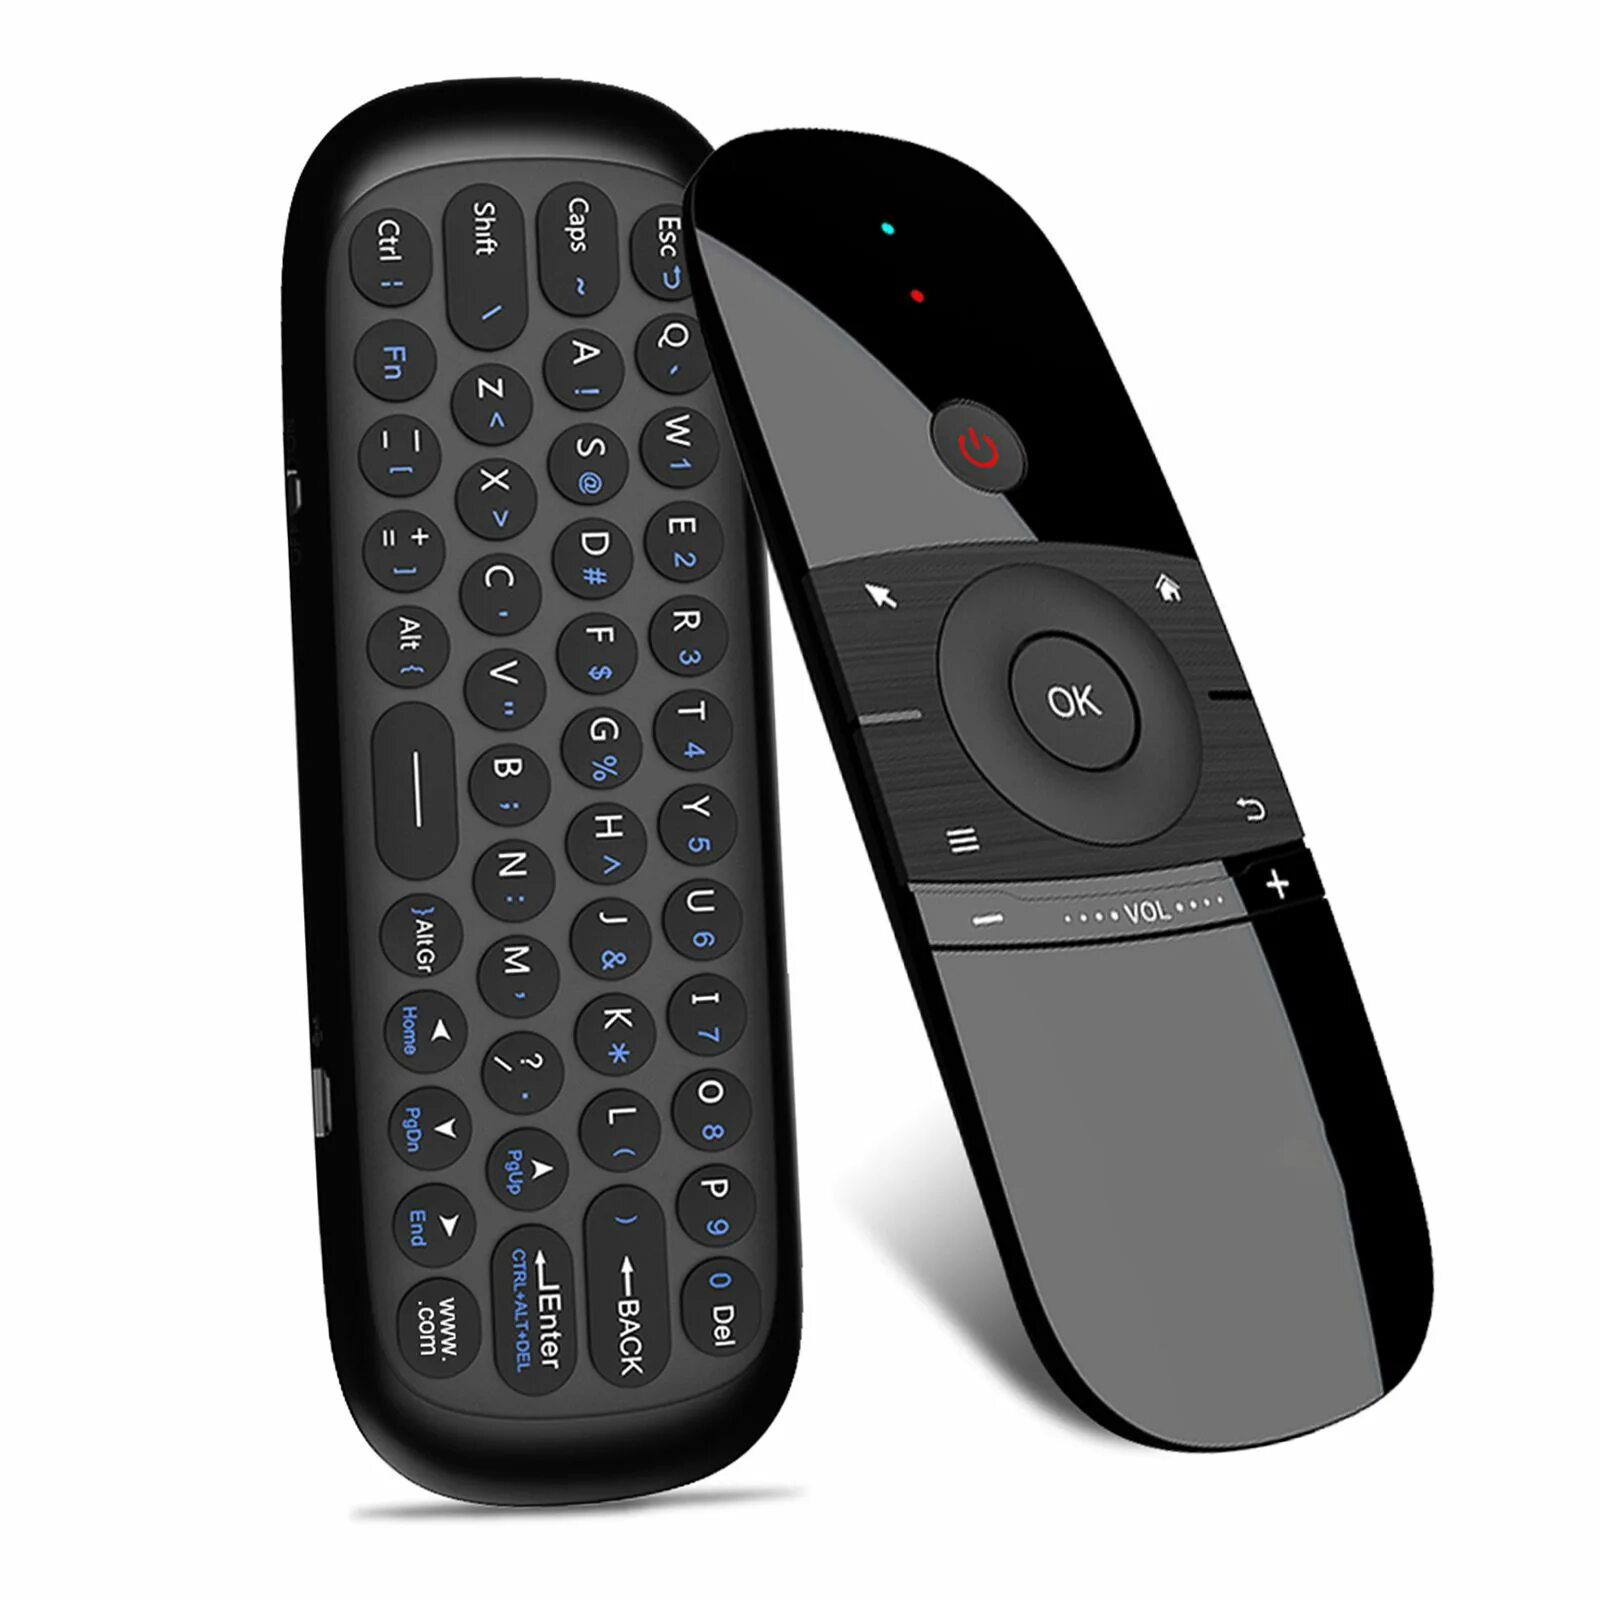 Пульт для смарт тв андроид. Пульт w1 Air Mouse. W1 2.4g Wireless Keyboard Air Mouse Smart Remote Control for Android TV Box PC. Air Mouse аэромышь w1. Пульт аэромышь для смарт ТВ.